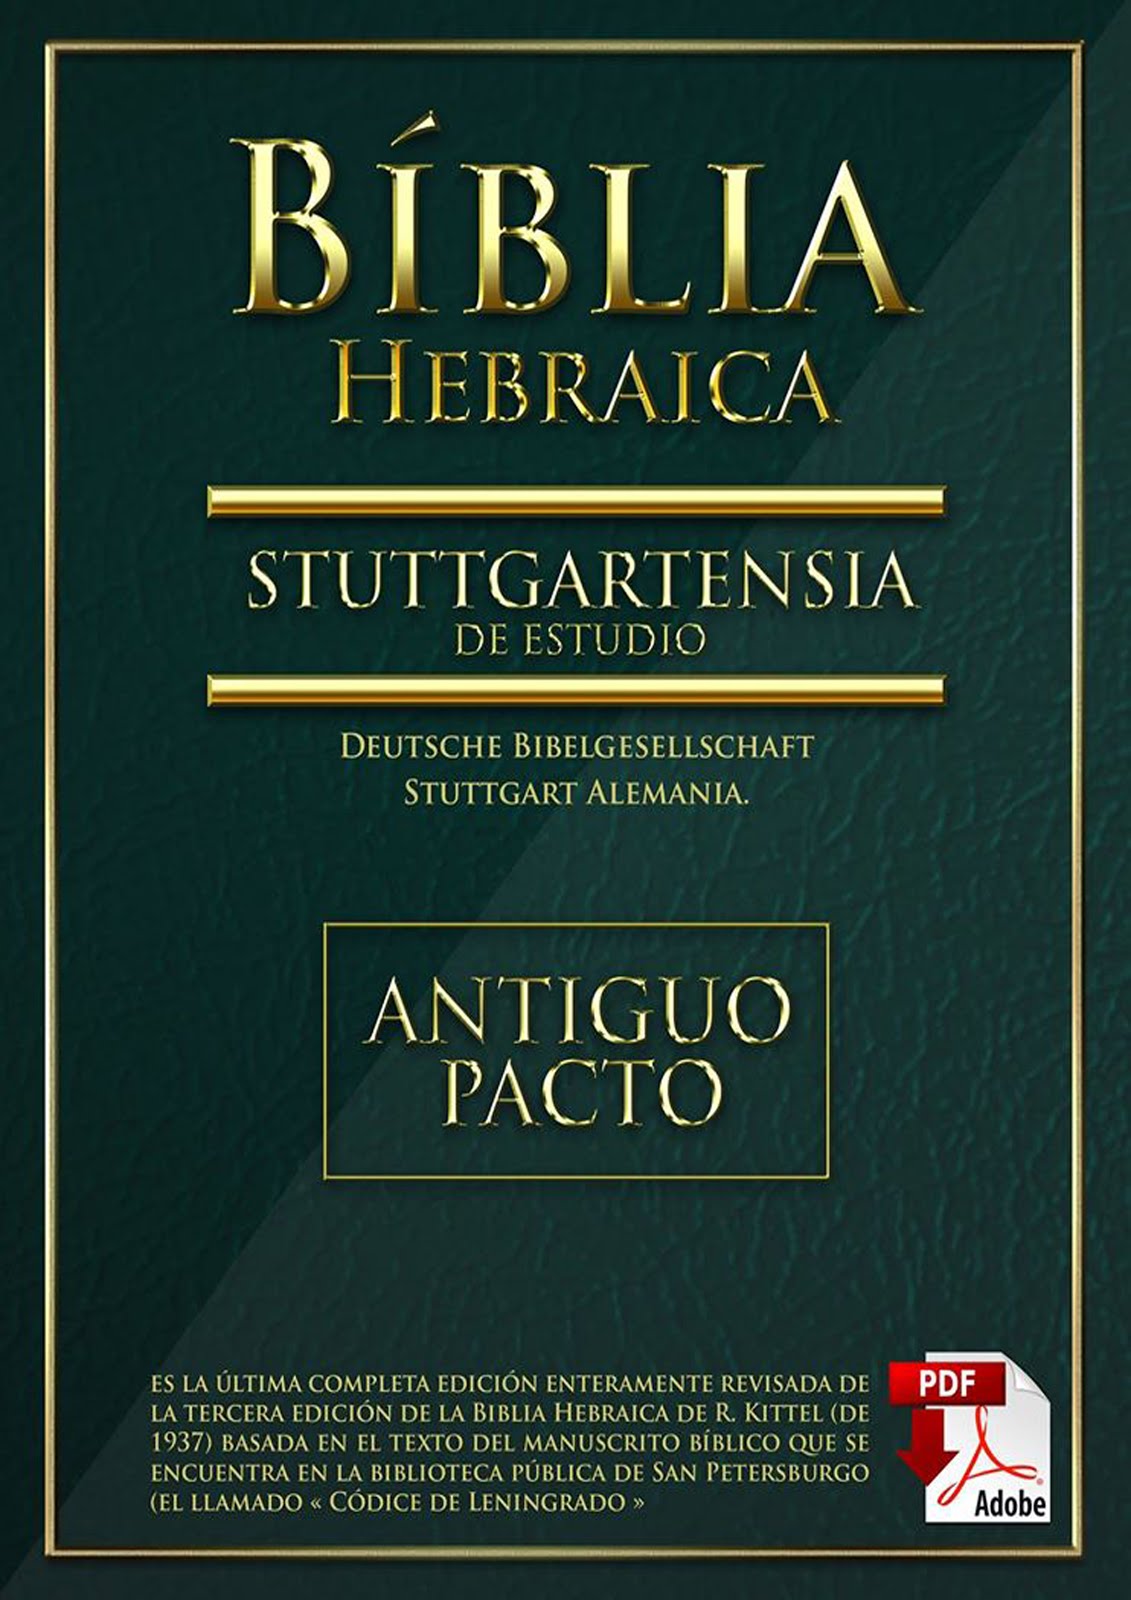 Biblia hebraica stuttgartensia pdf